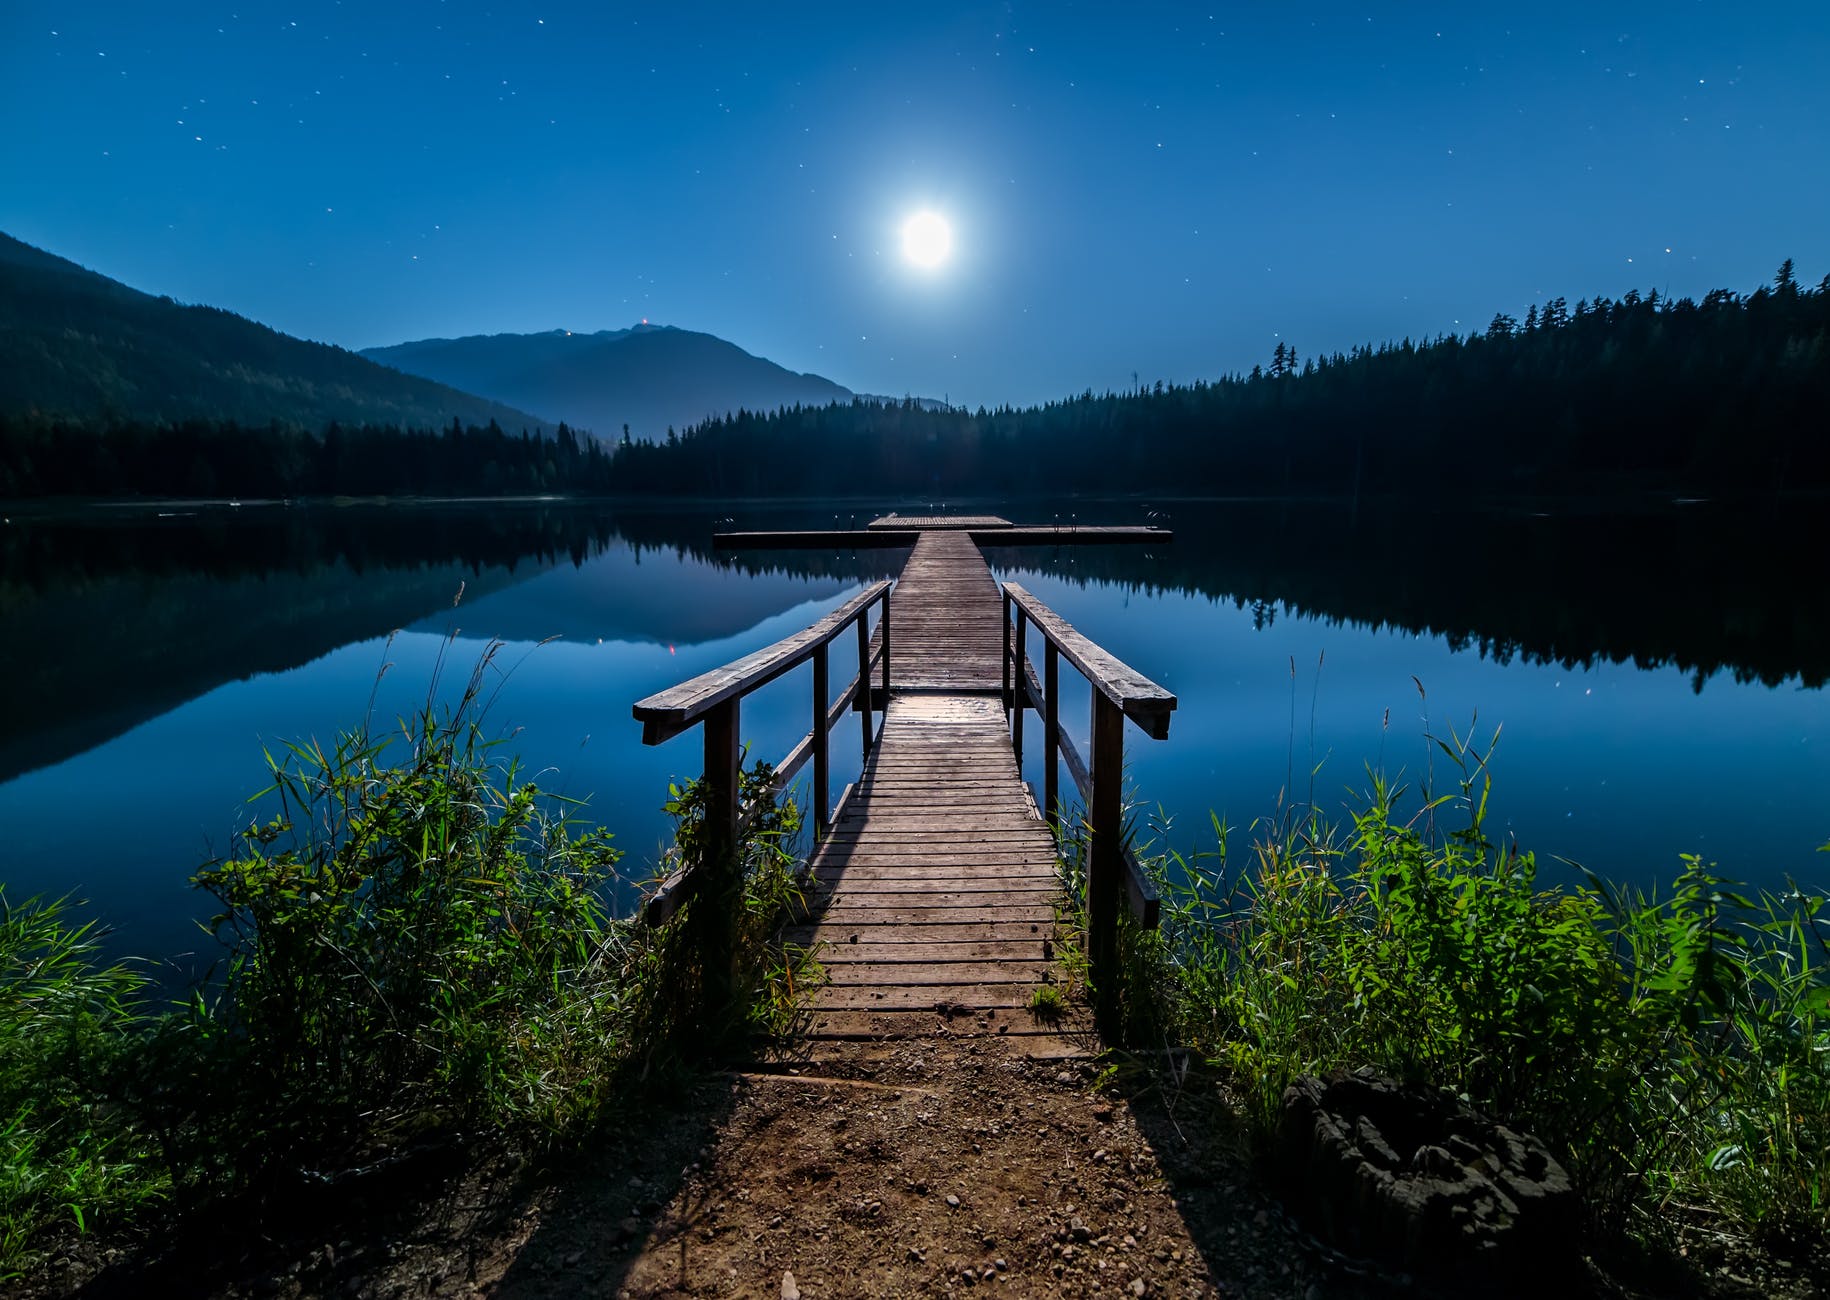 Moonlight shining on the lake. Calm music to sleep.